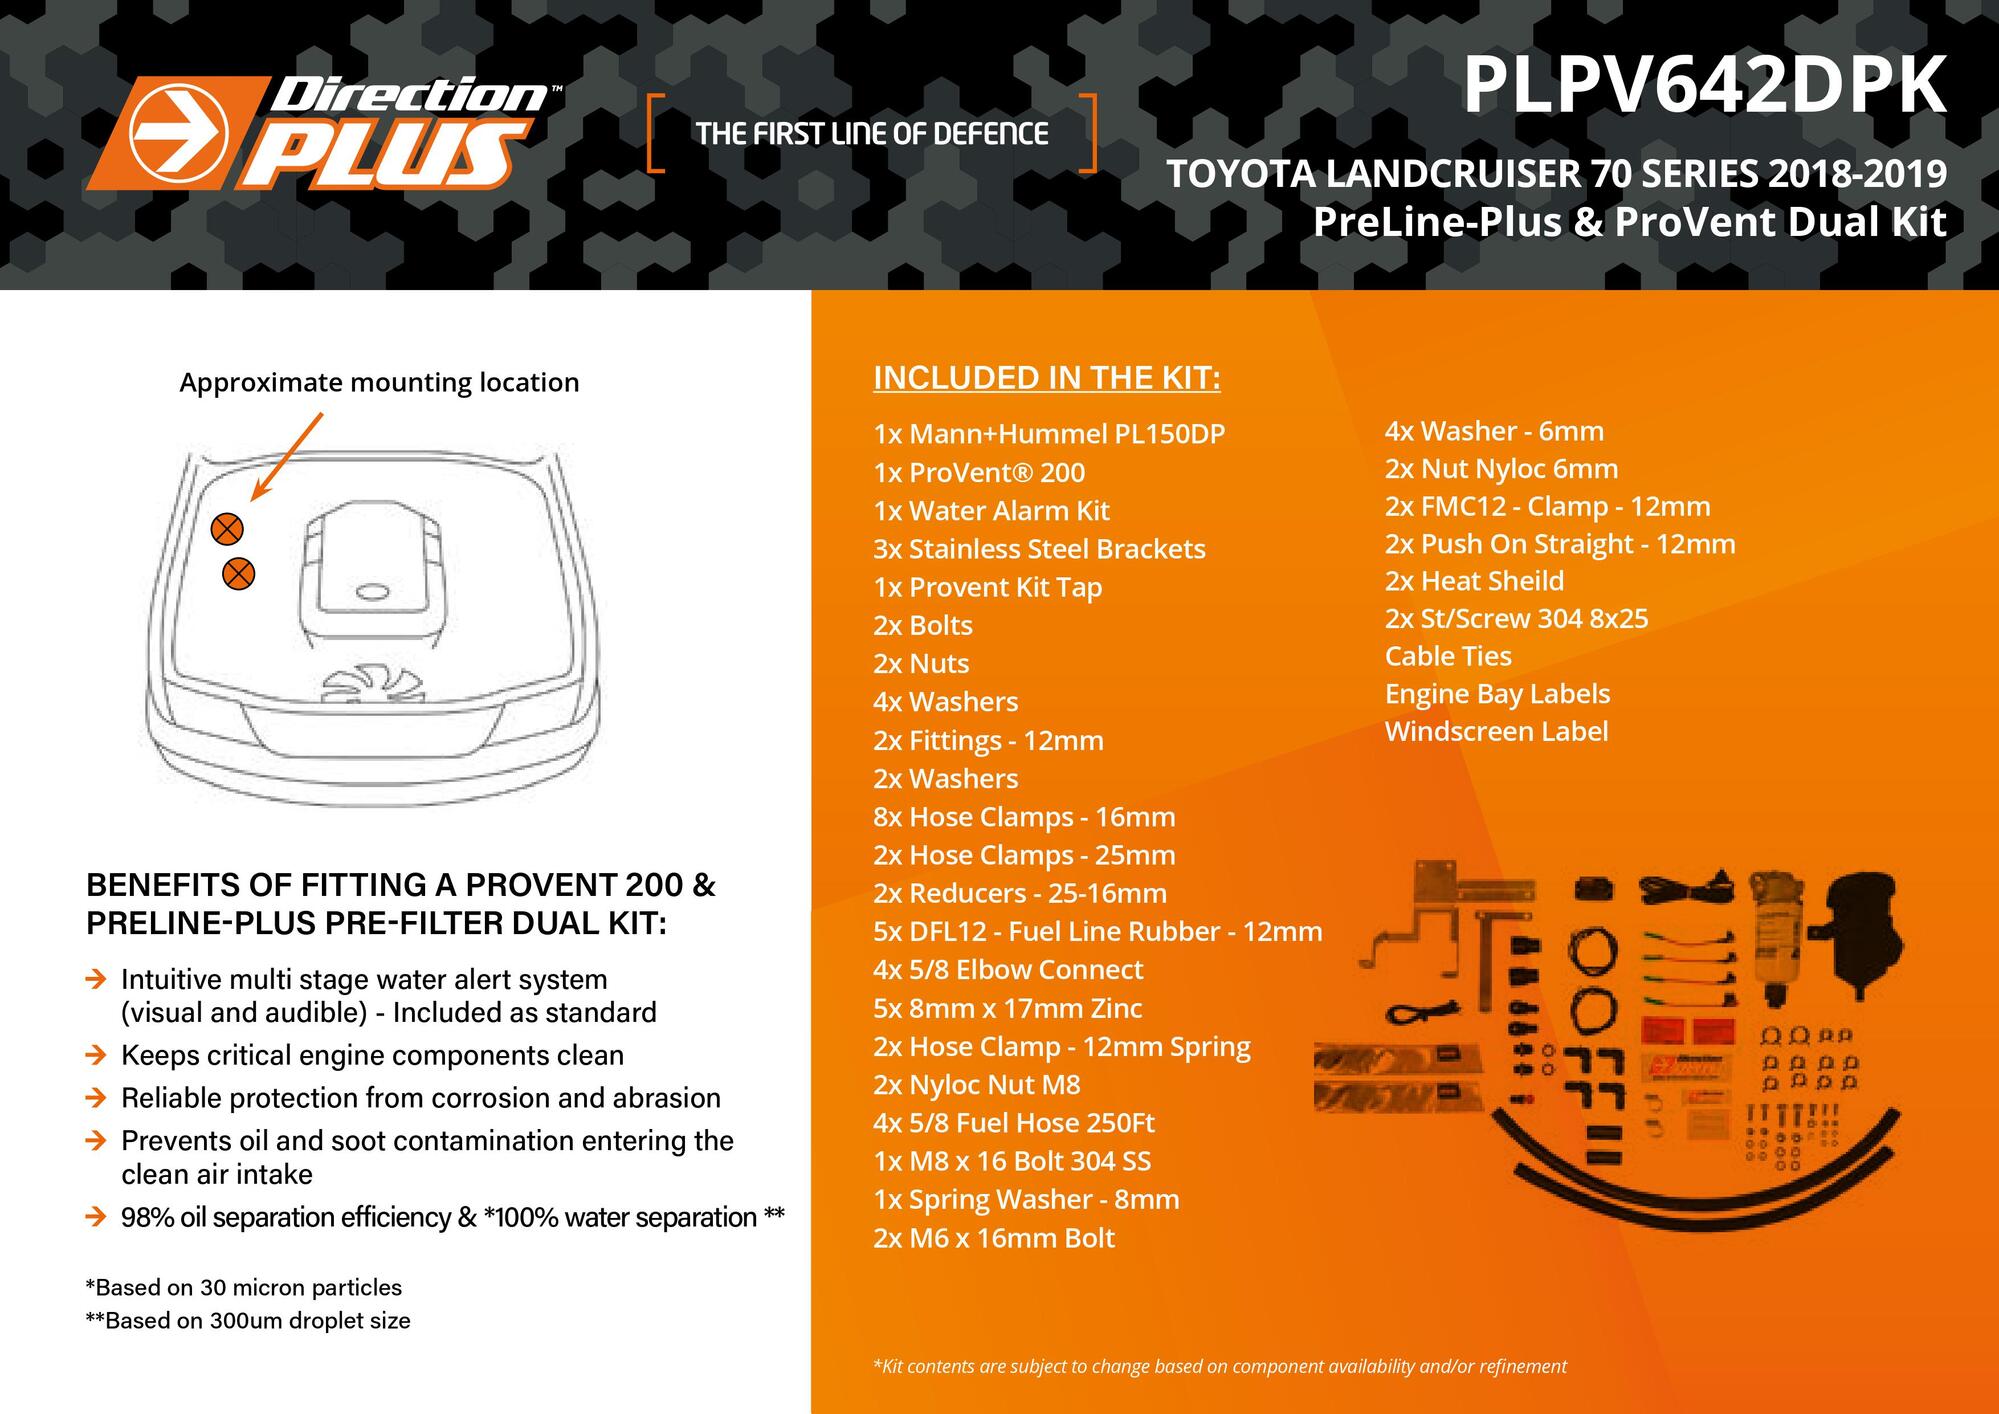 PreLine-Plus & Provent 200 Dual Kit For Toyota Landcruiser 70 Series 2018 - On